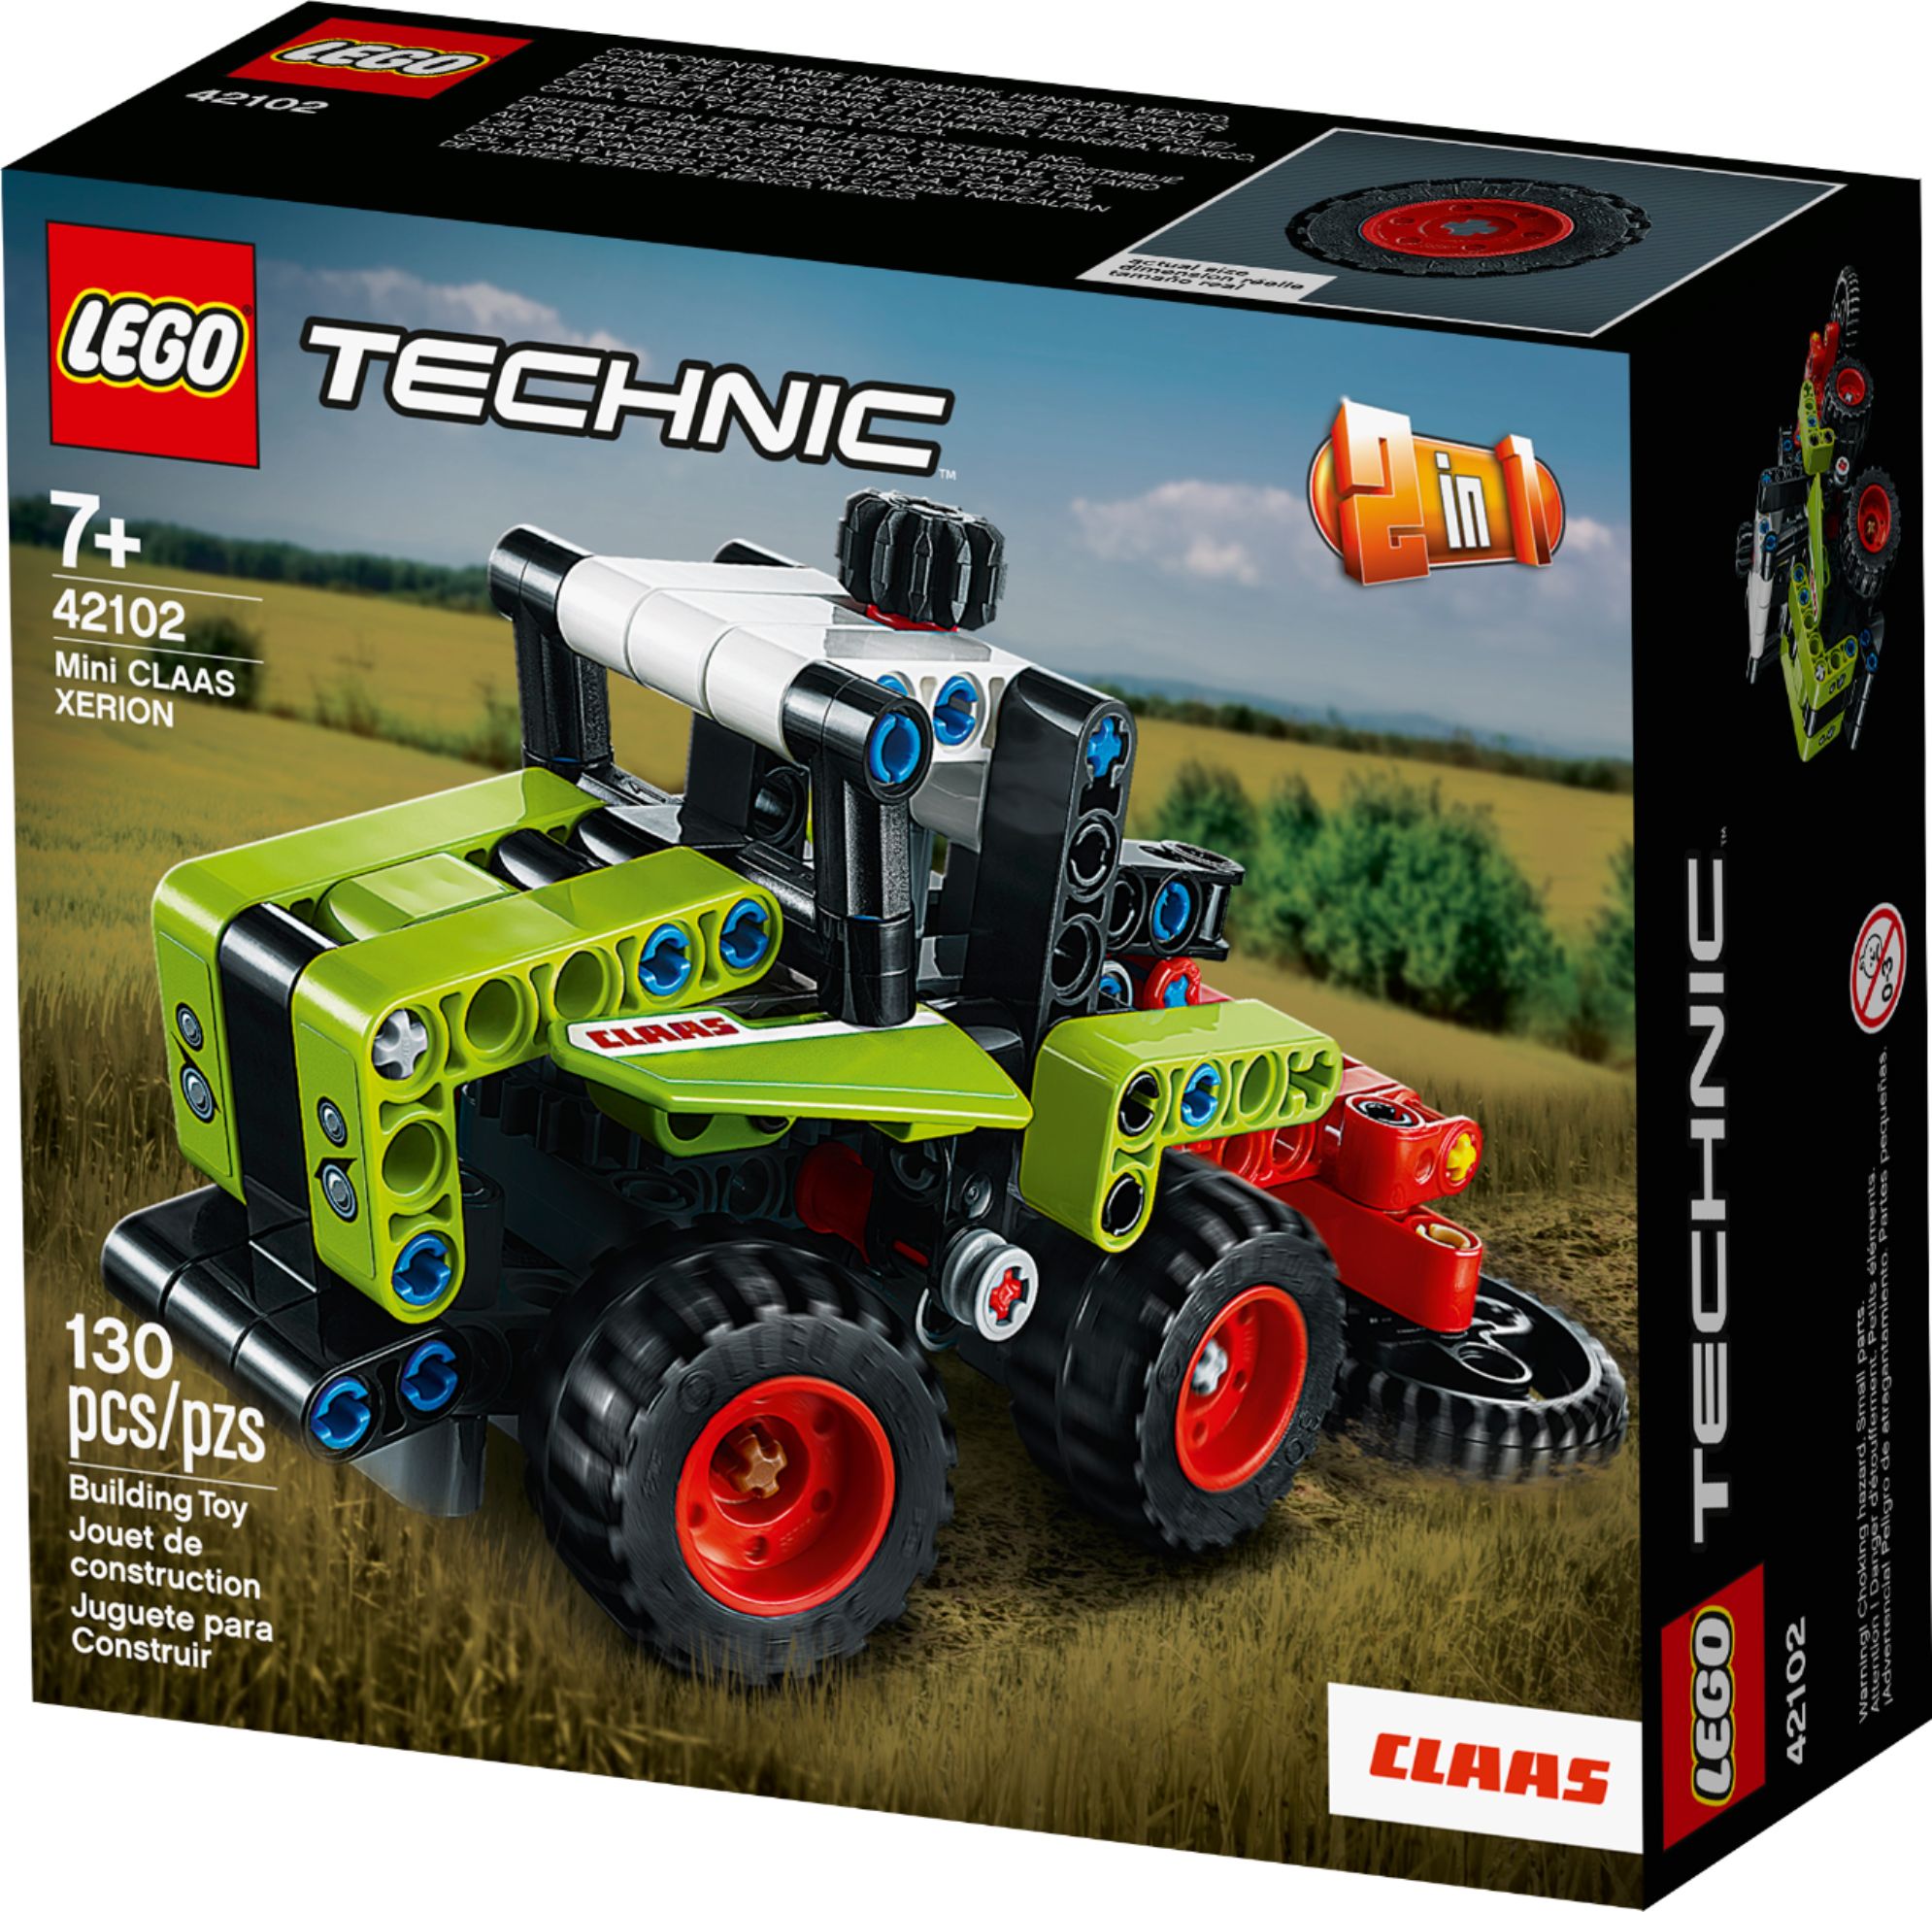 Lego Technic Mini CLAAS XERION Building Set 